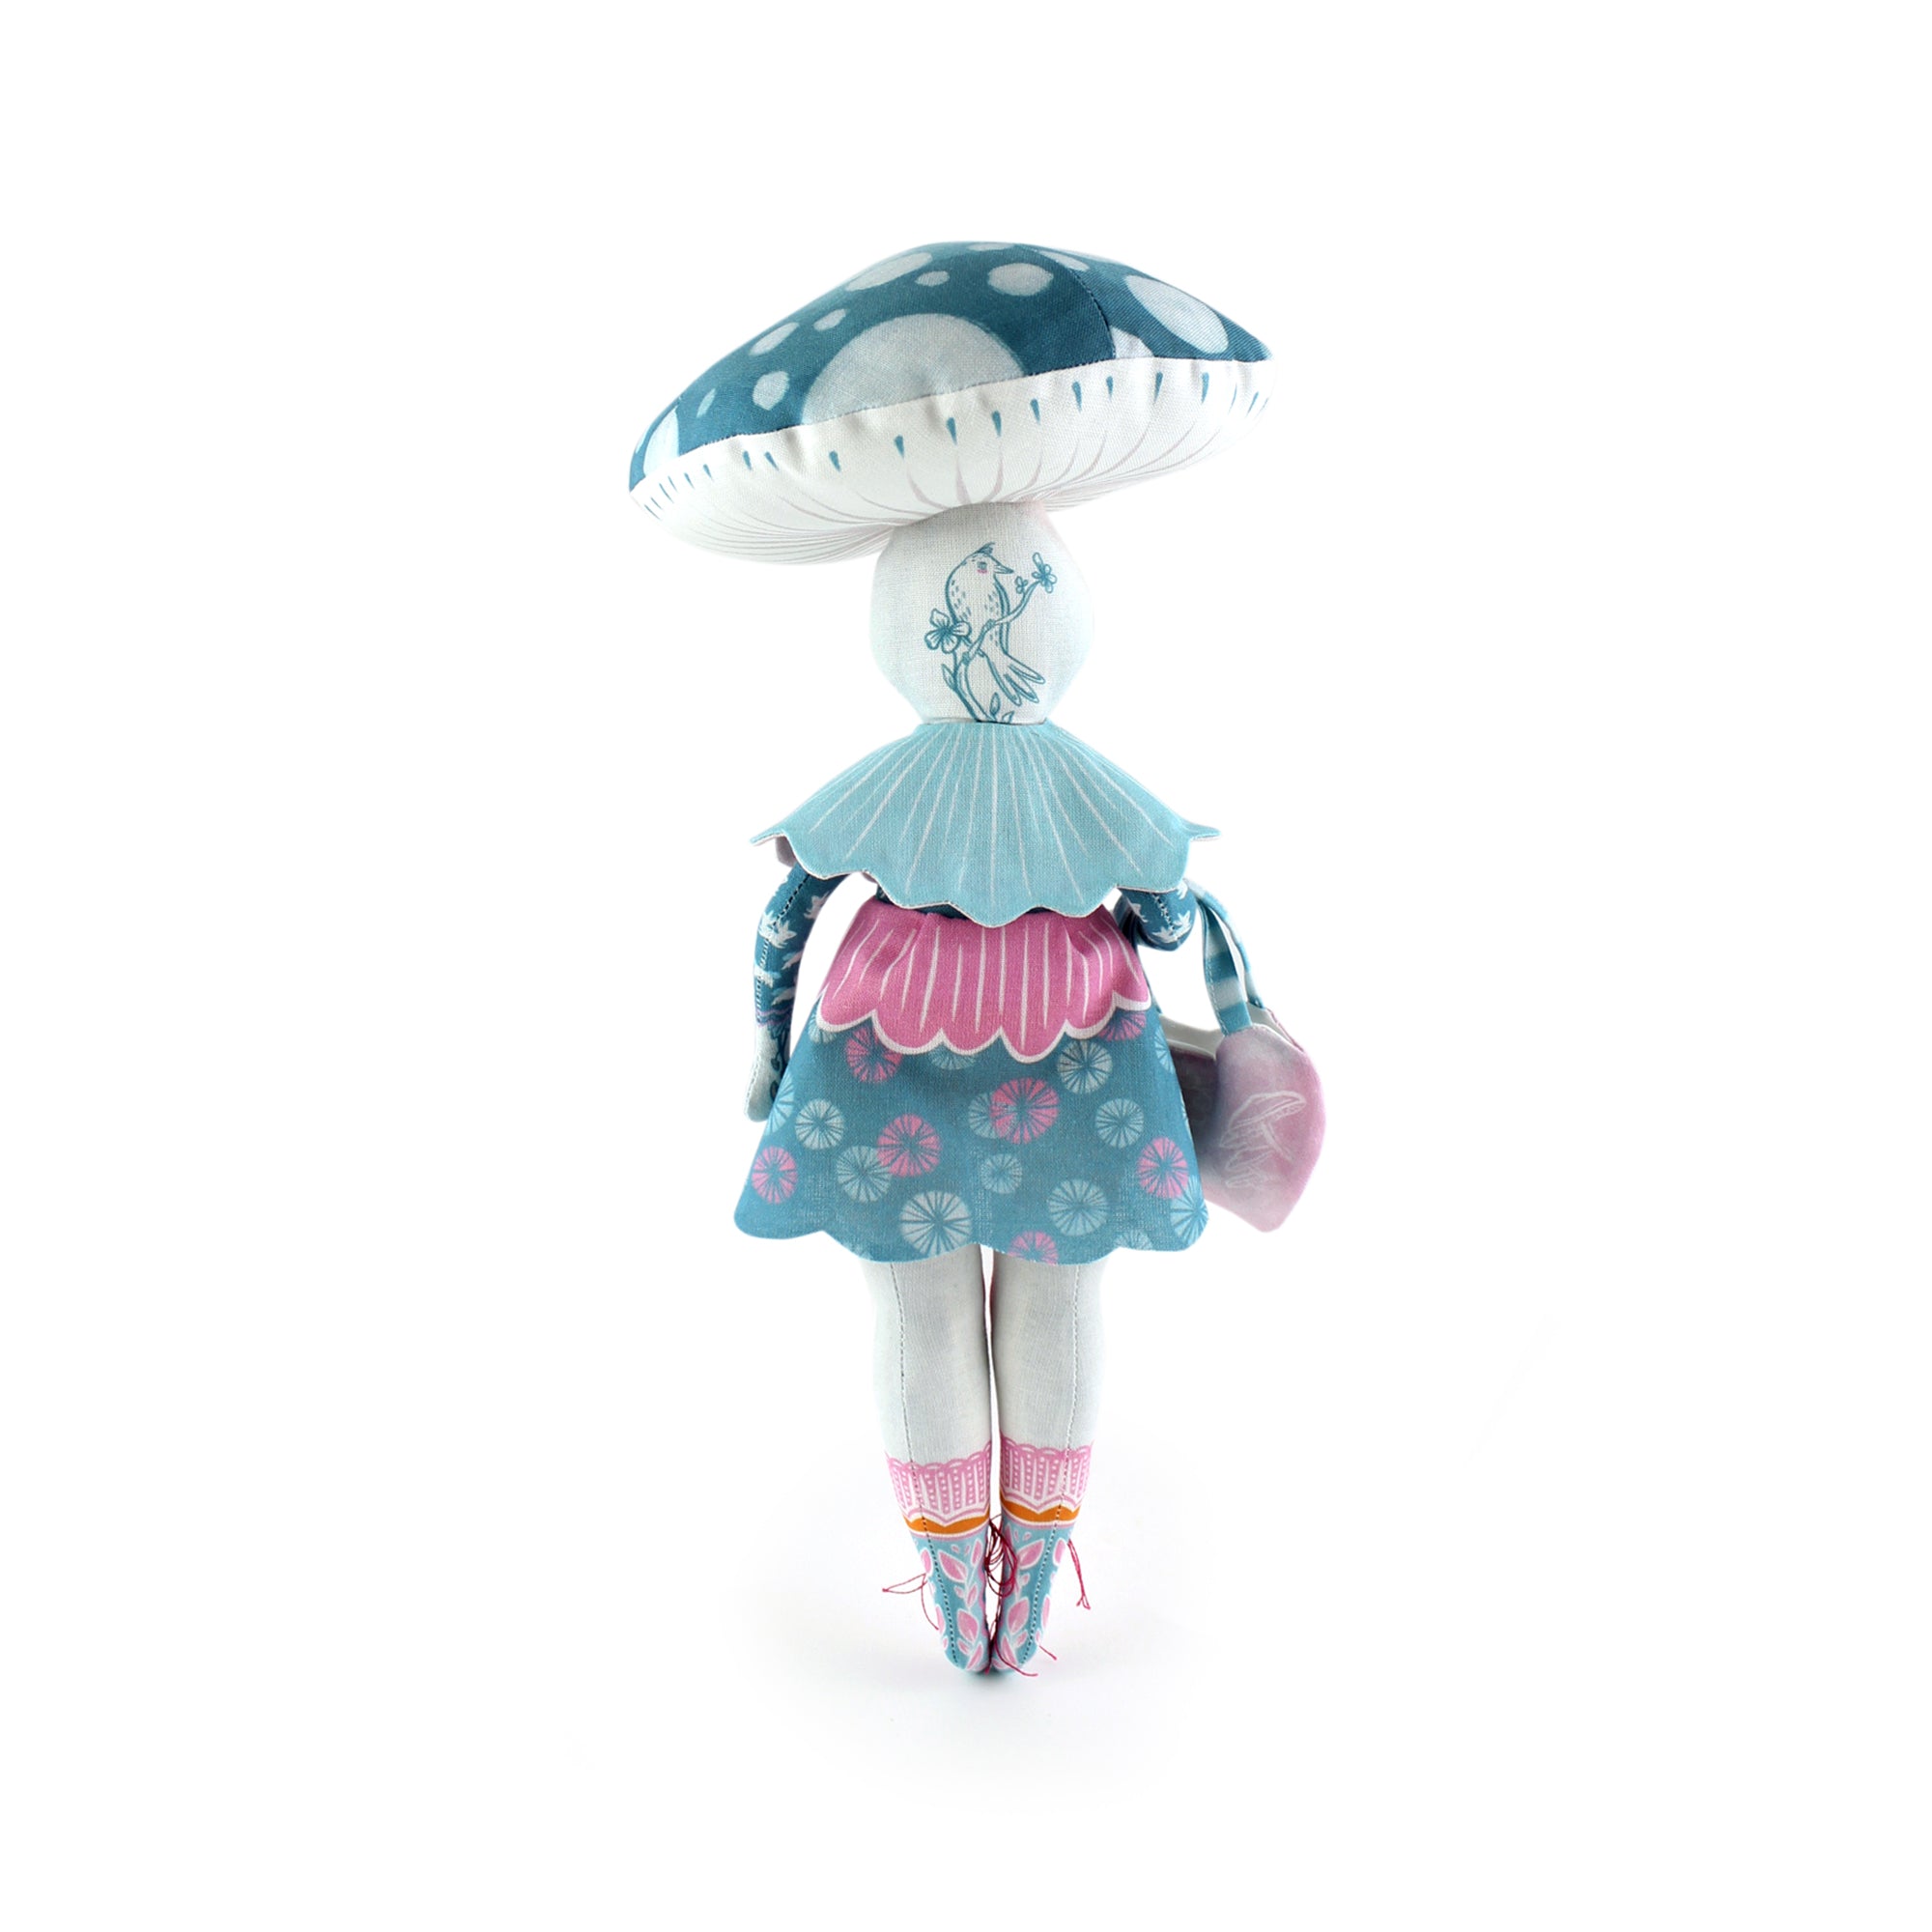 DIY Kit - Gertie the Mushroom Girl with 20 page Handmade mini story book - FREE UK SHIPPING